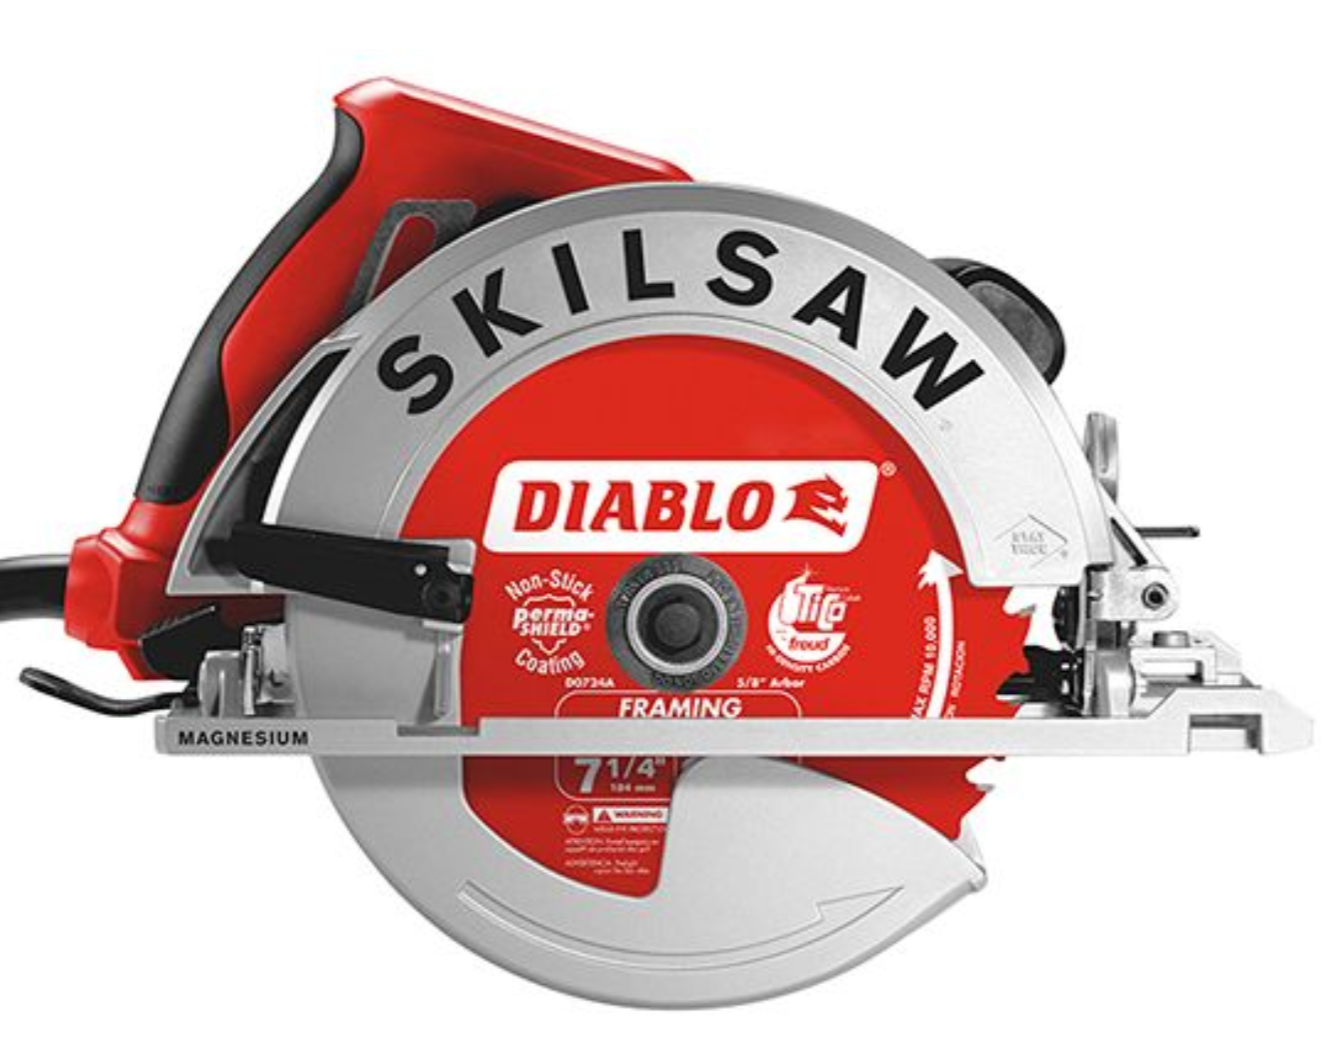 SkilSaw 7 ¼” Circular Saw S400 CROPPED